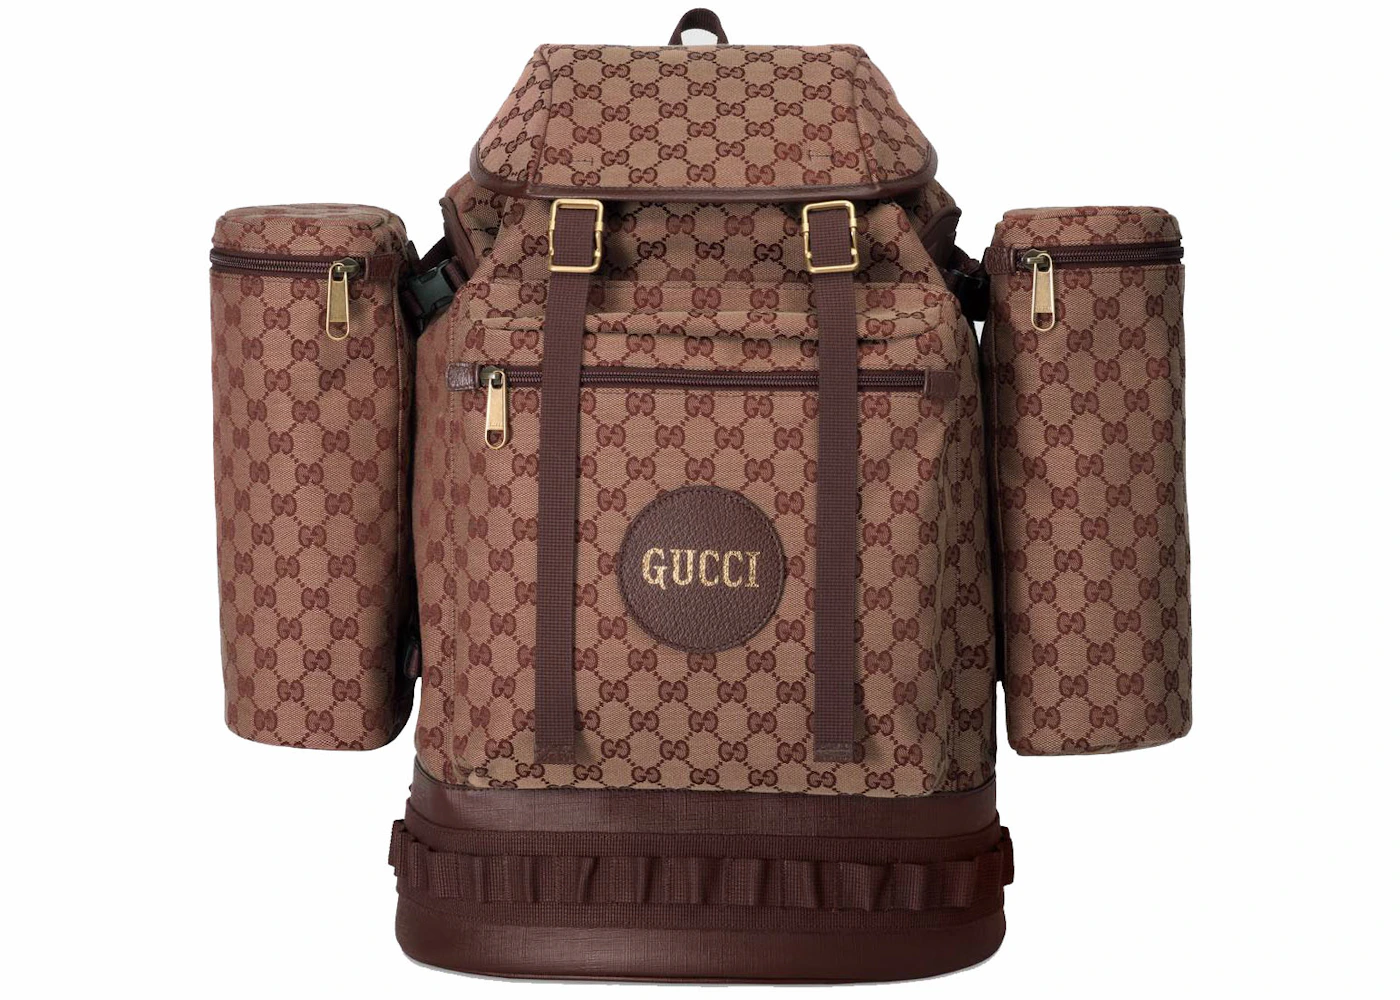 Gucci Men's Jumbo GG Leather-trimmed Backpack - Black - Backpacks